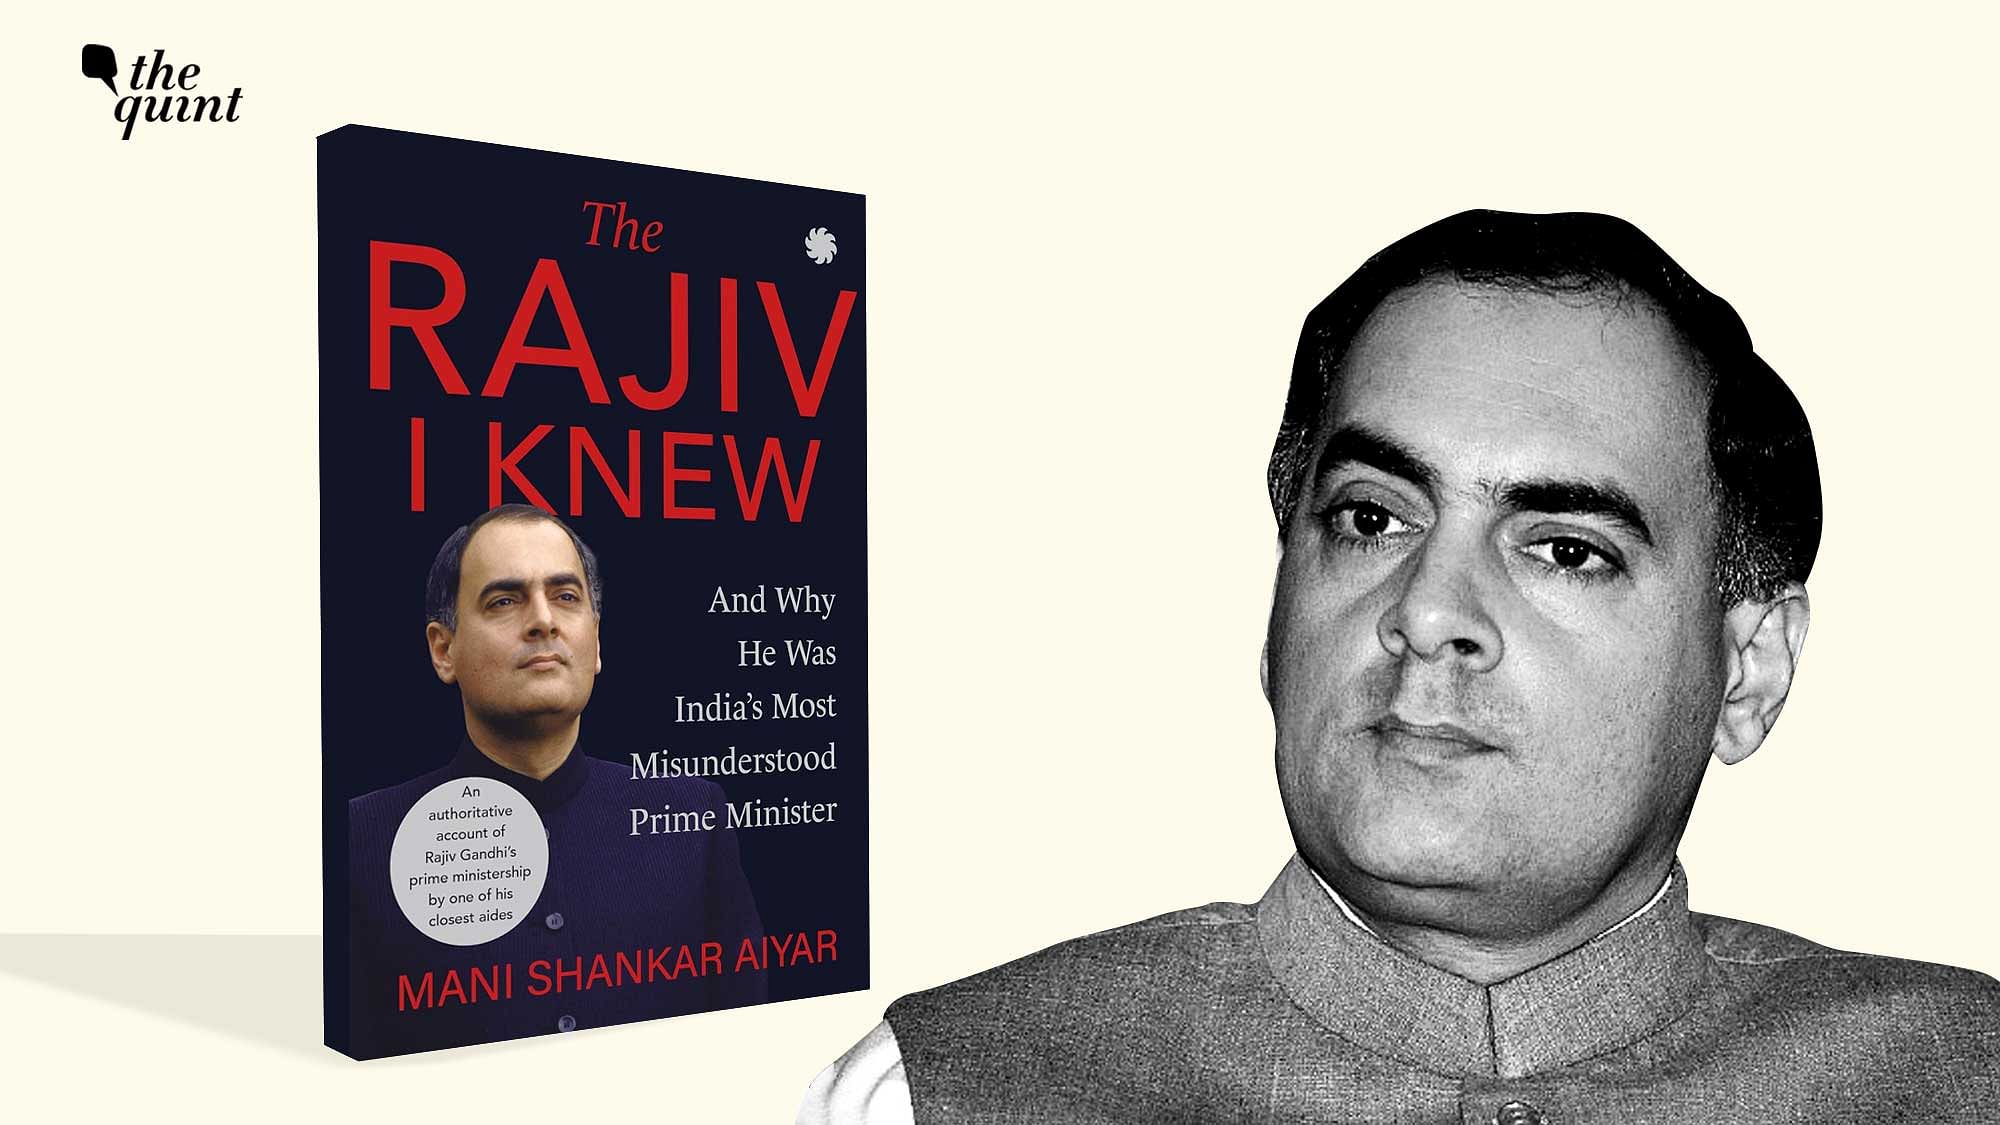 <div class="paragraphs"><p><em>The Rajiv I Knew and Why he was India’s Most Misunderstood Prime Minister.</em></p></div>